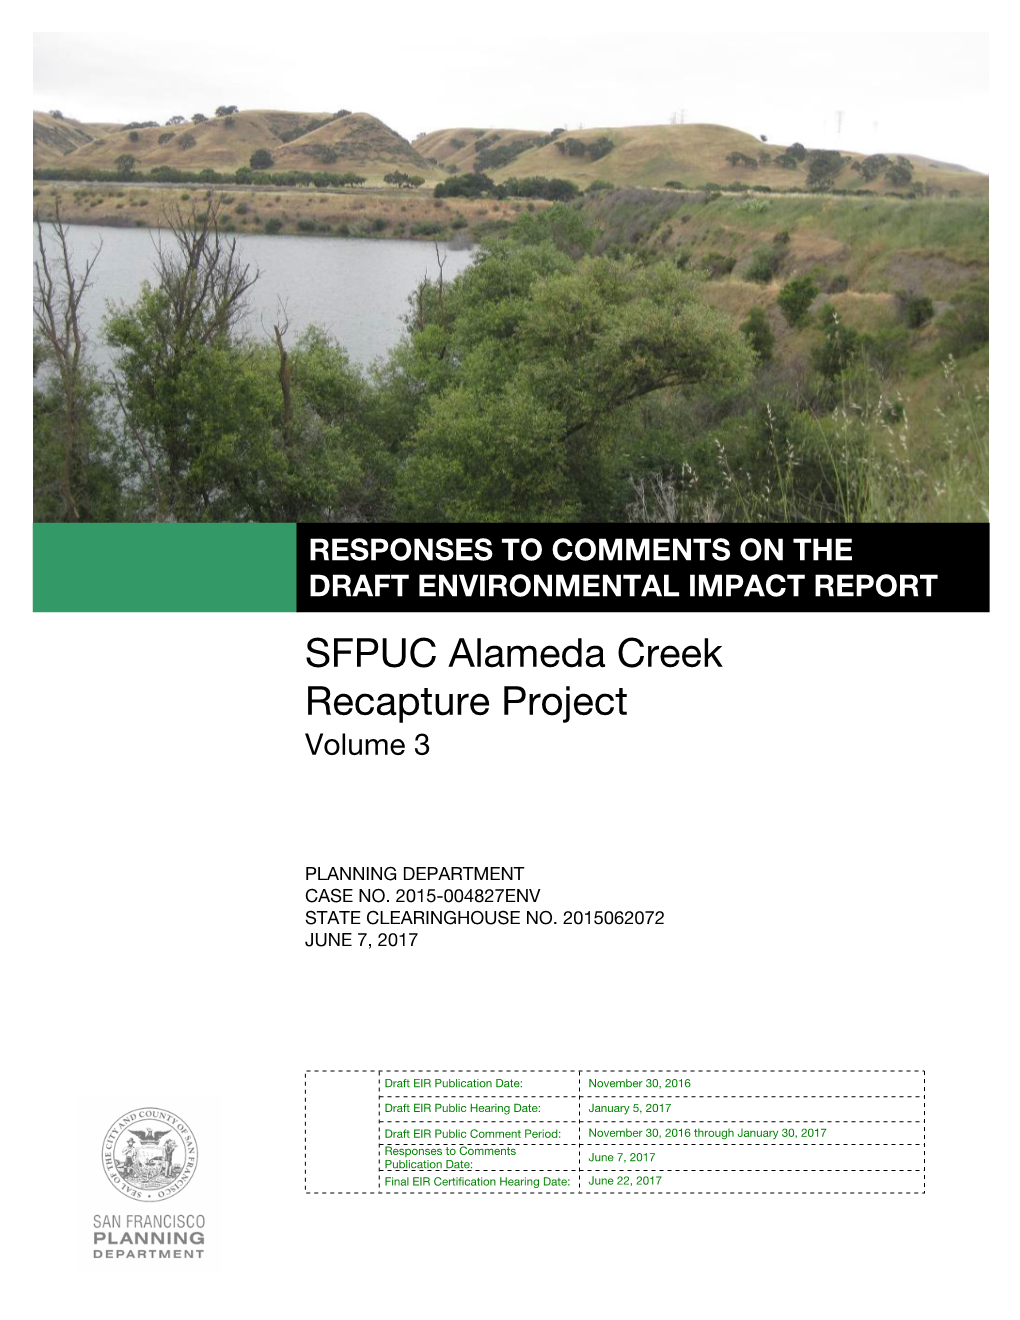 SFPUC Alameda Creek Recapture Project Volume 3